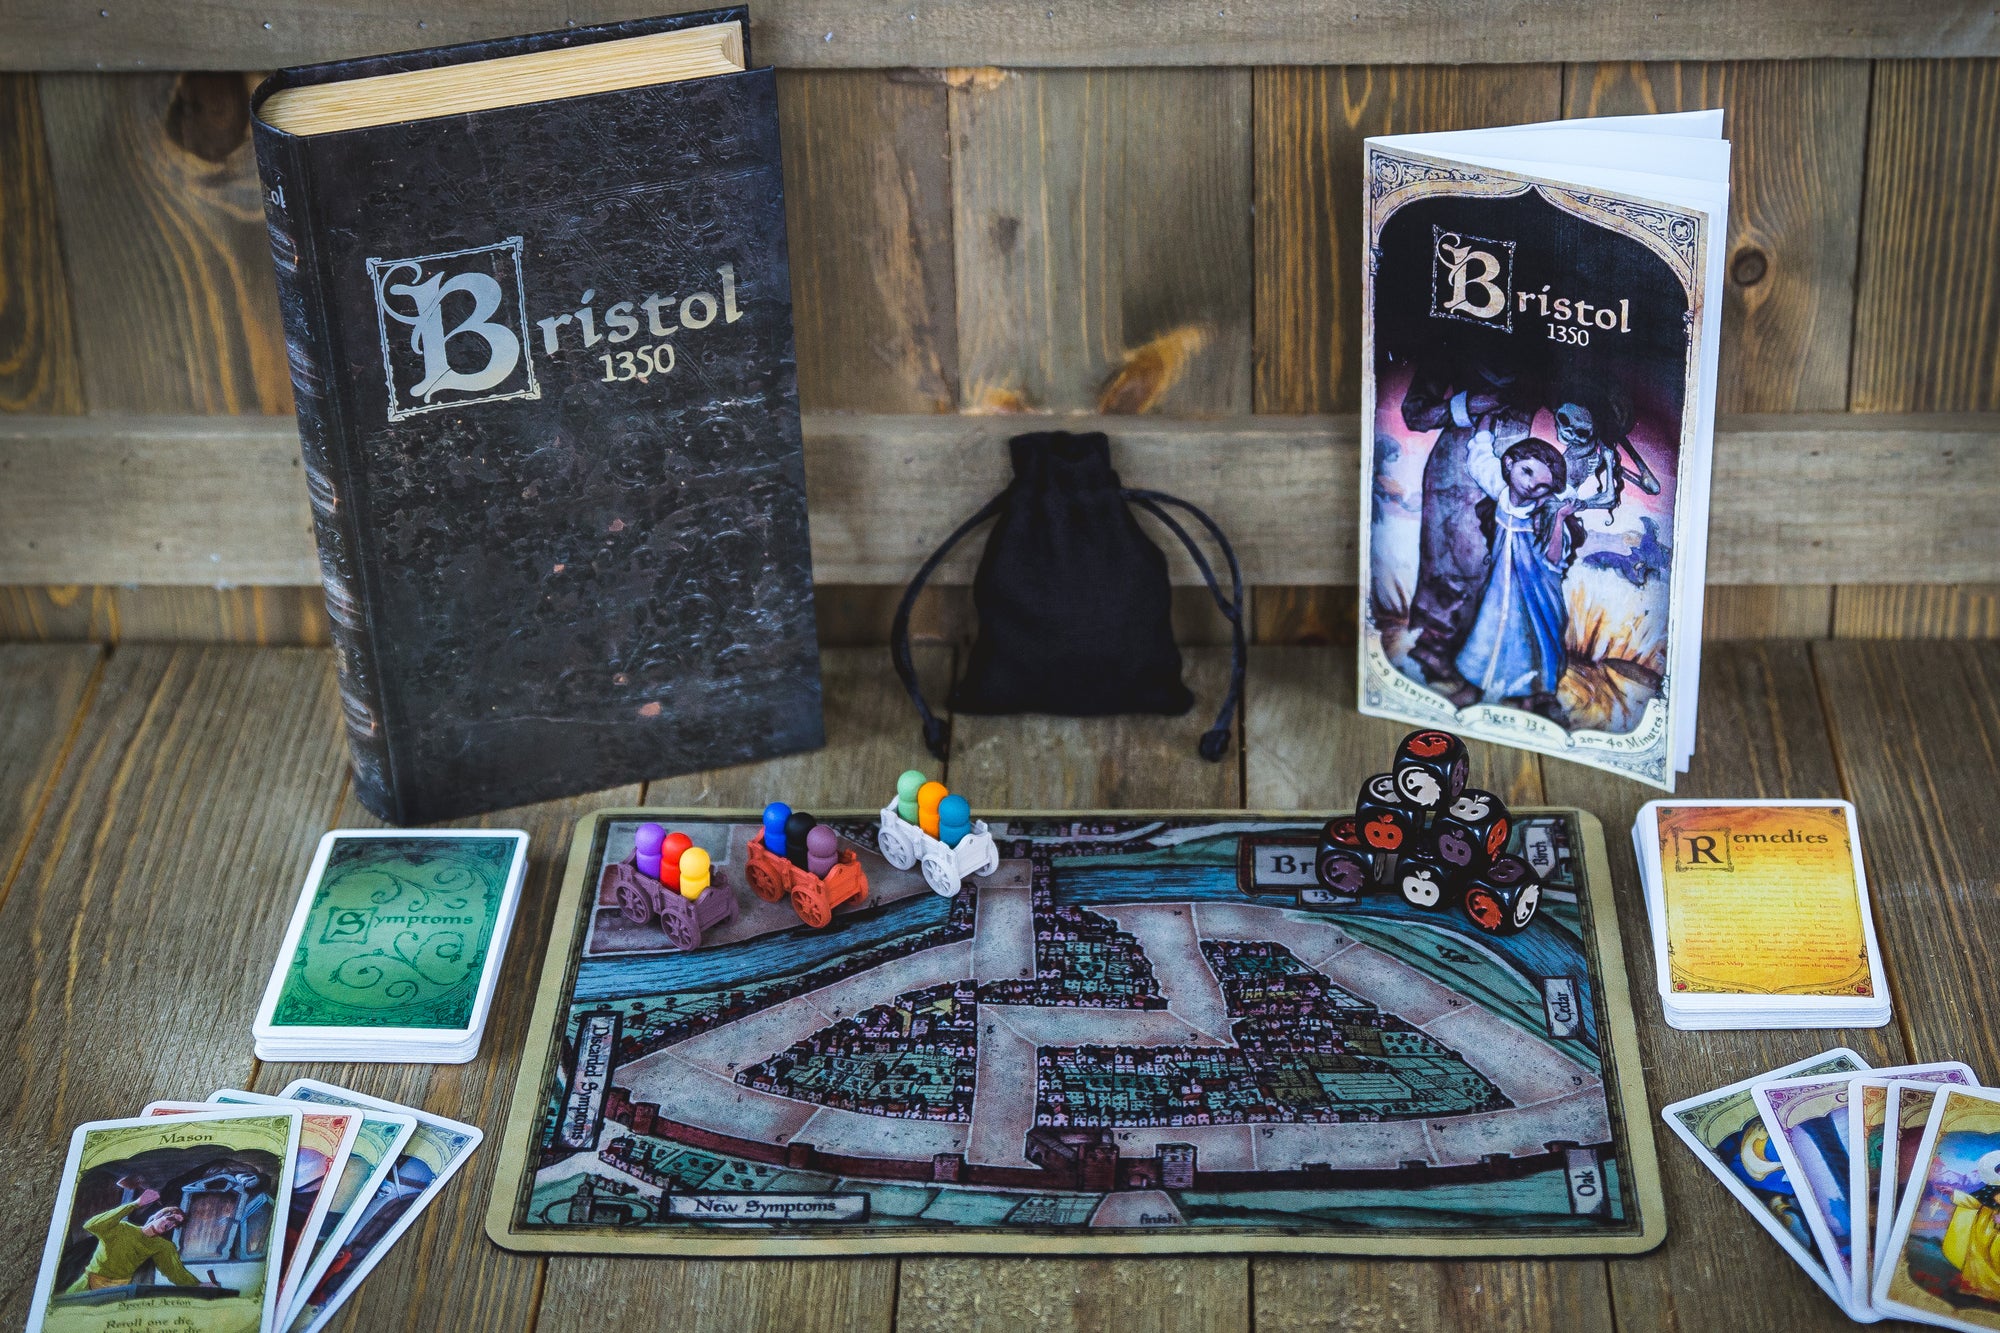 Bristol 1350 Launches on Kickstarter May 26th!